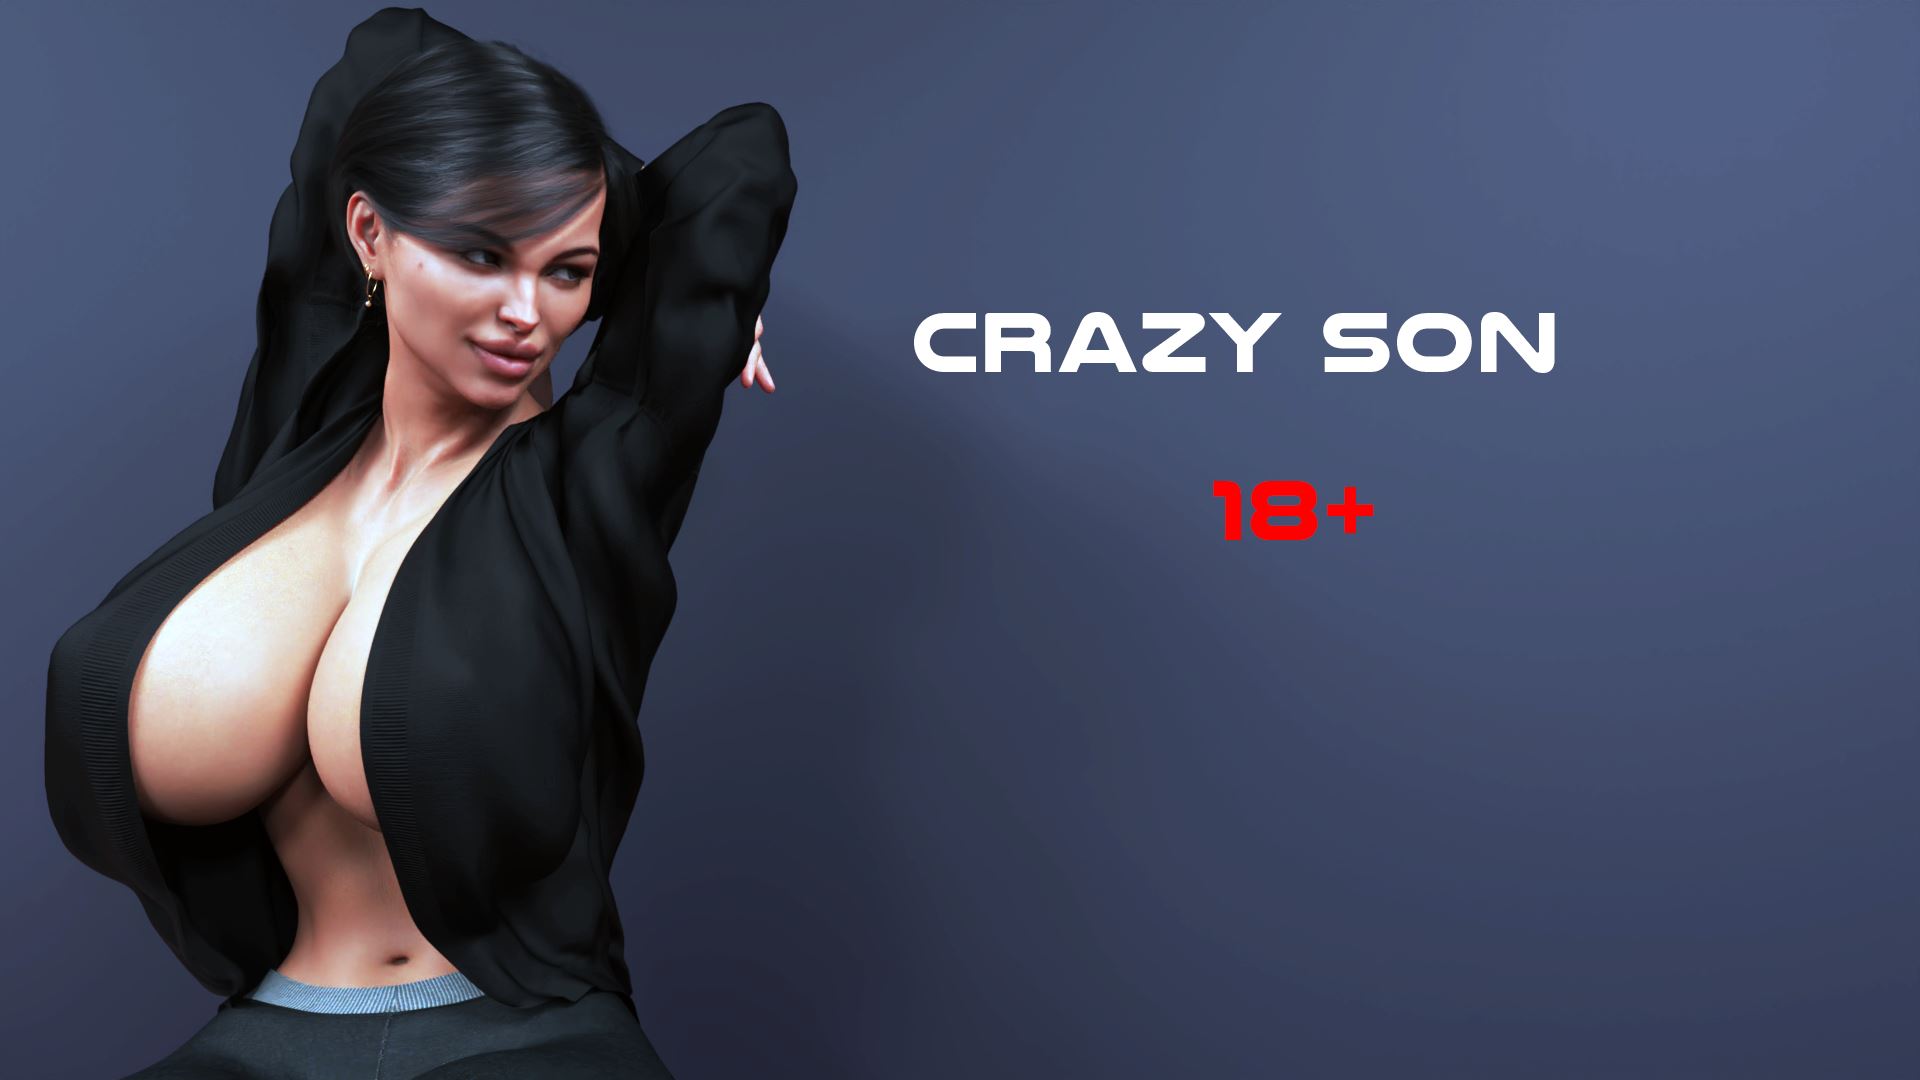 Xx Sune - Ren'Py] Crazy Son - v0.01a by Crazy Wanker 18+ Adult xxx Porn Game Download